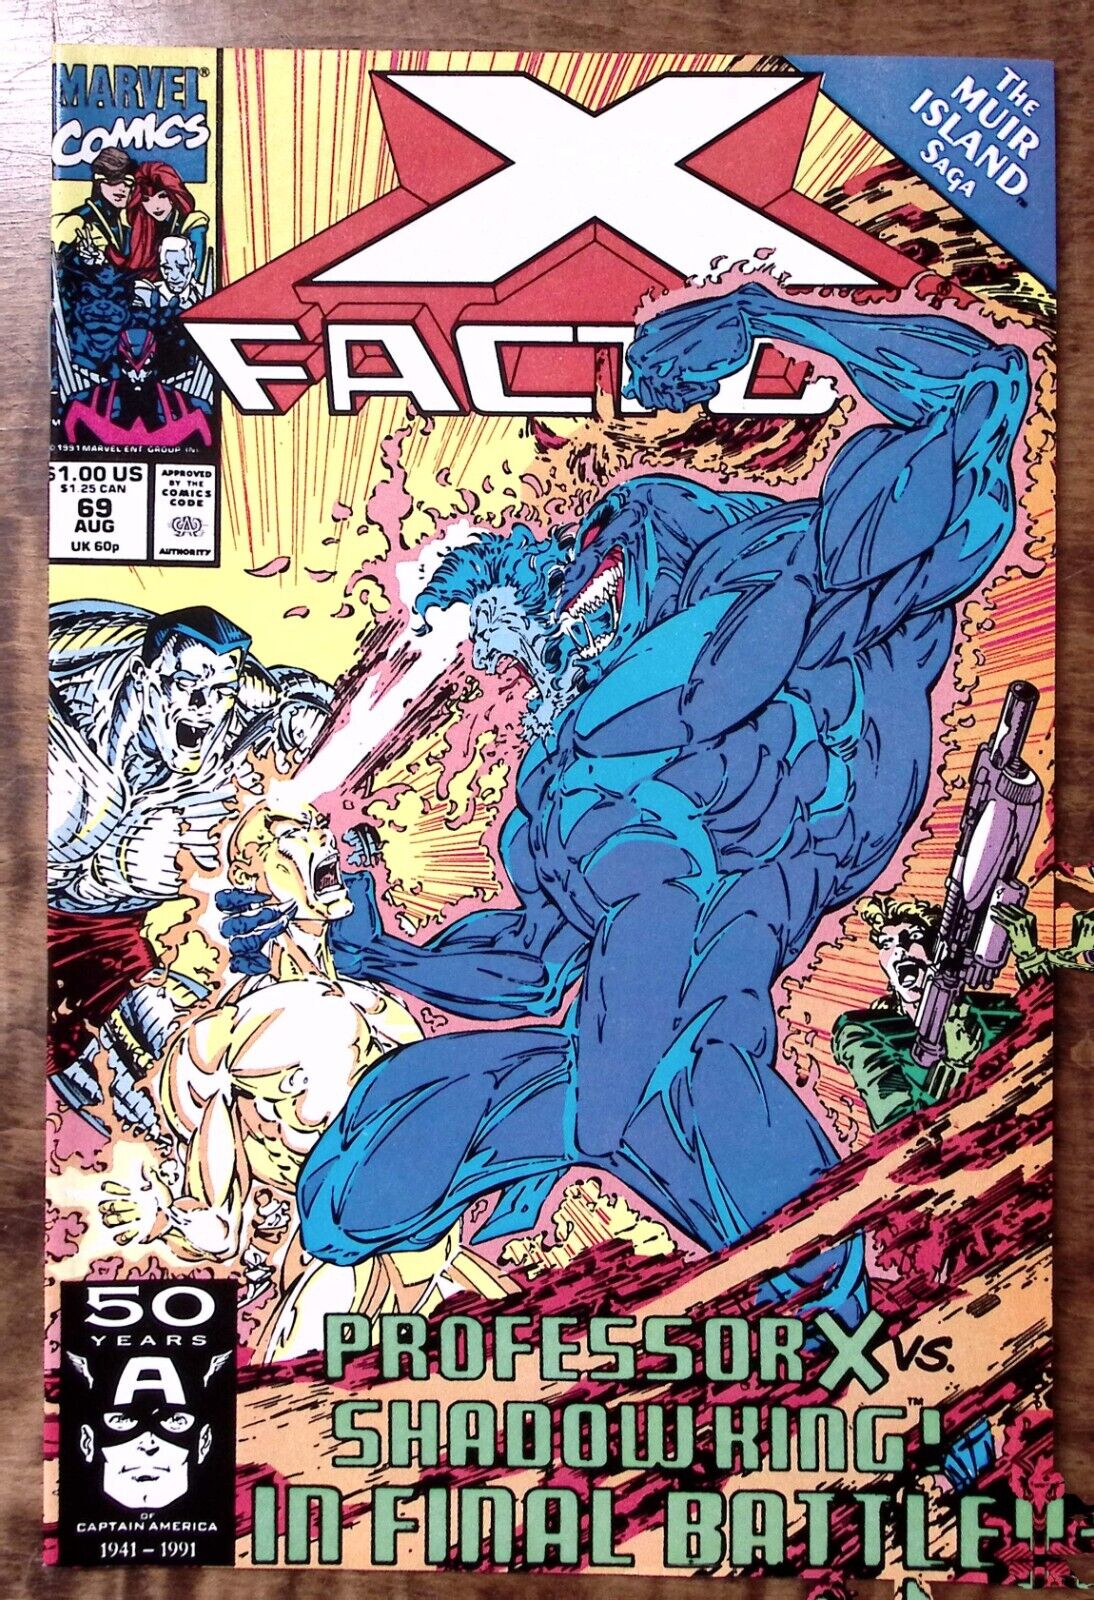 1991 X-FACTOR #69 AUG PROFESSOR X VS SHADOW KING  EXC MARVEL COMICS  Z4443